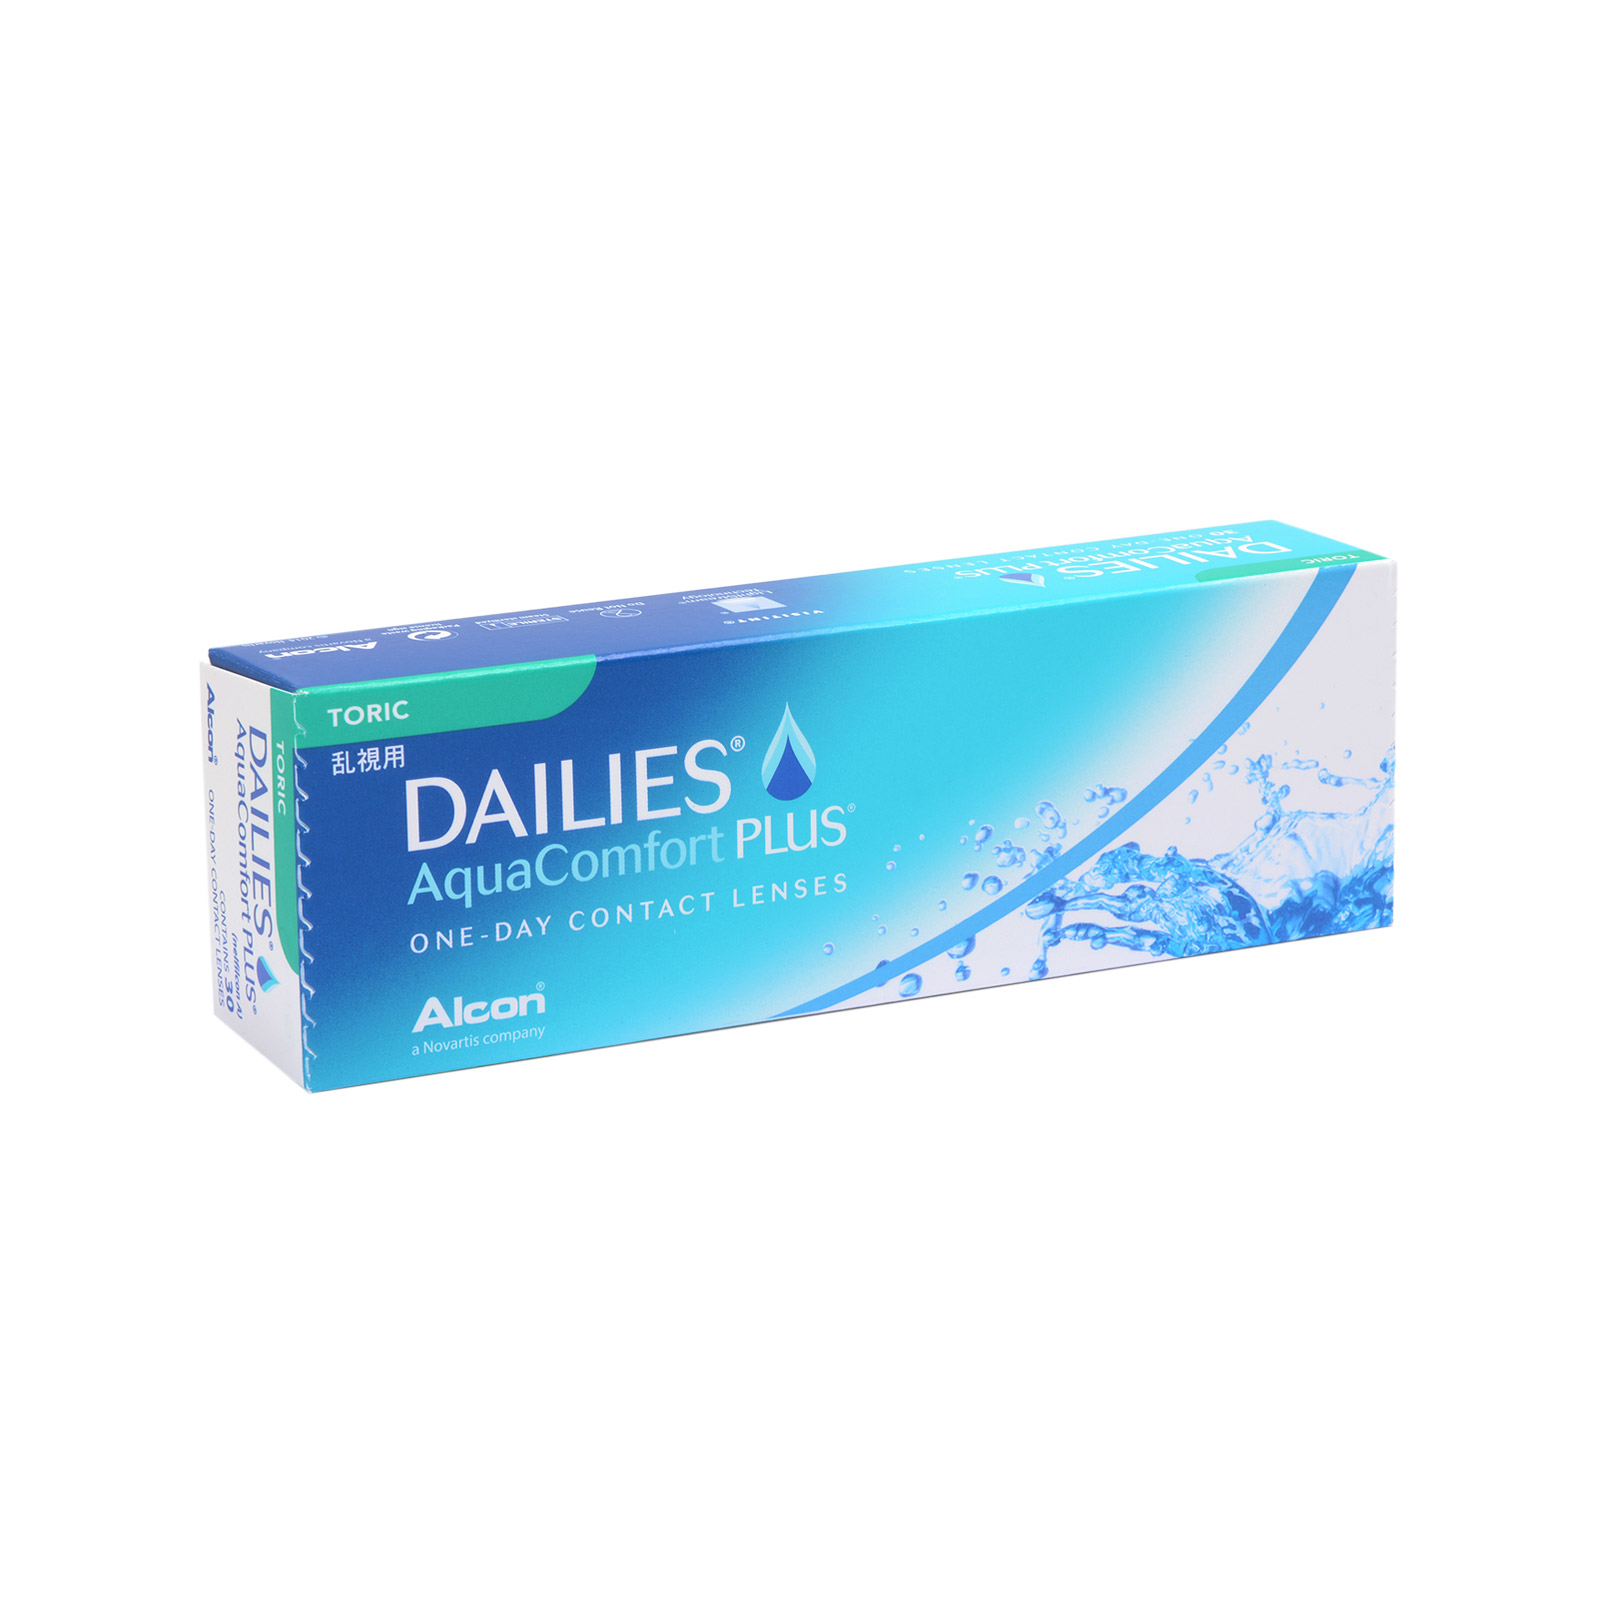 dailies-aquacomfort-plus-toric-dailies-alcon-kontaktlinsen